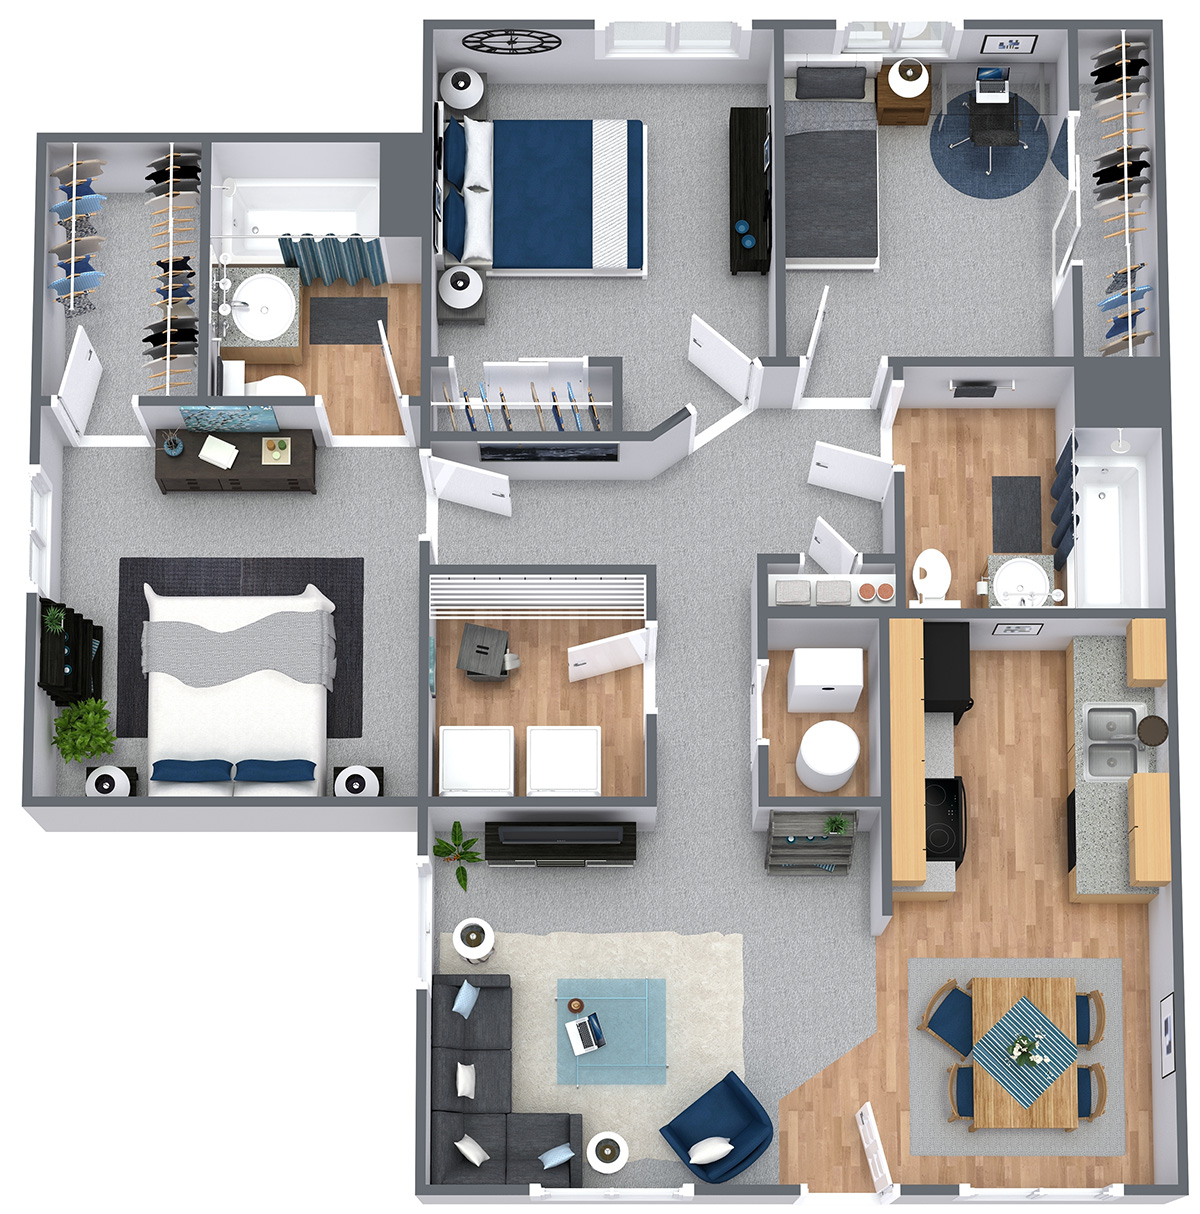 Delaware Crossing Apartments & Townhomes - Floorplan - 3Bedroom/2Bath - Upgraded